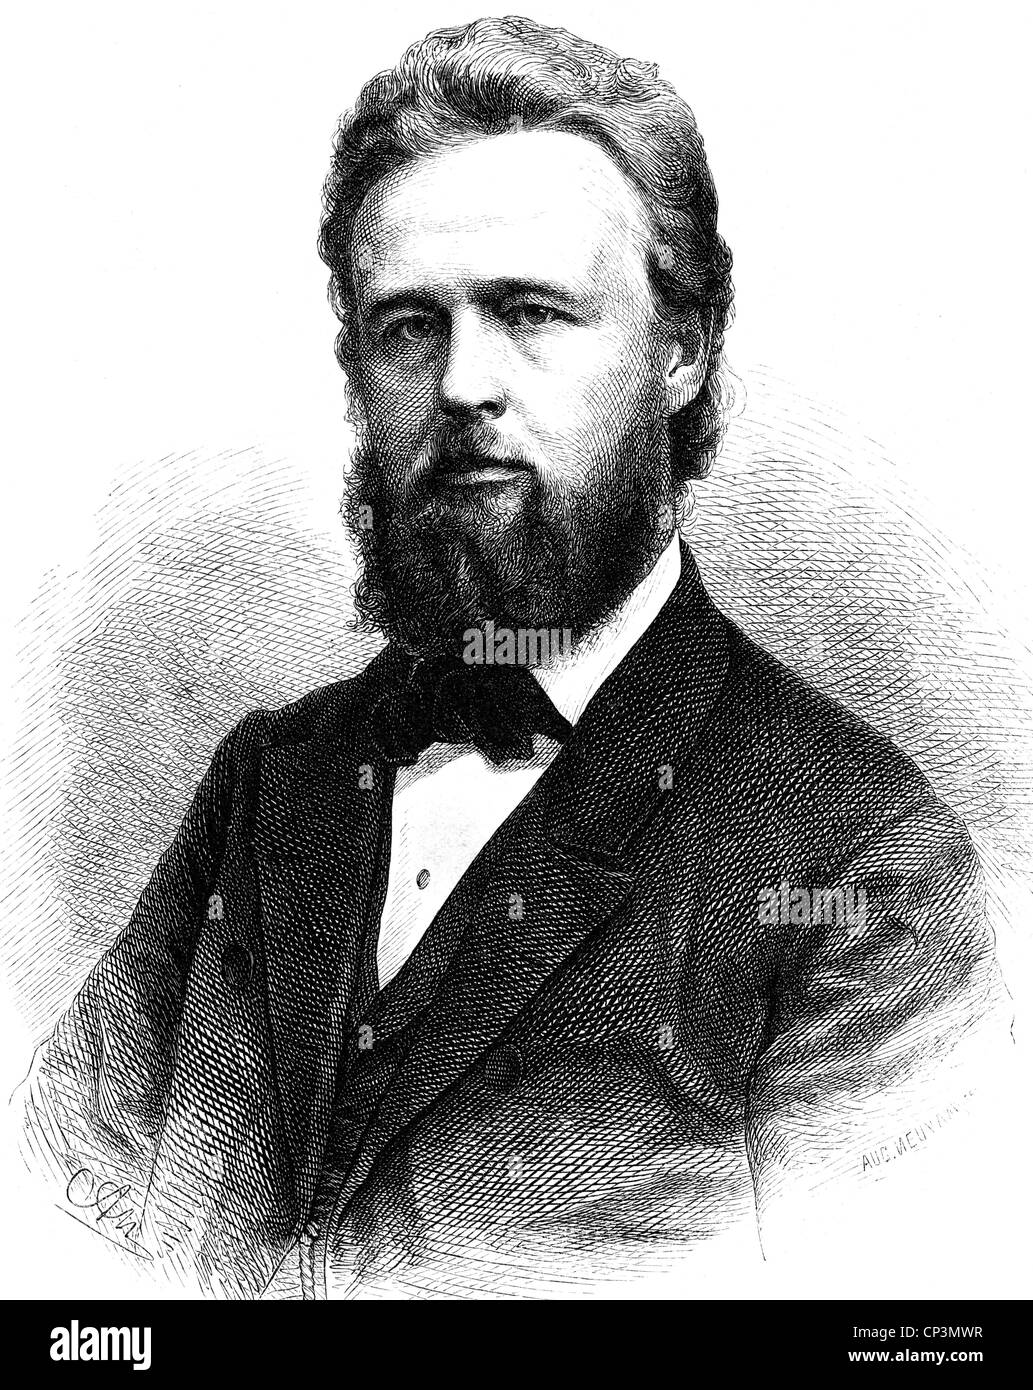 Kapp, Friedrich, 13.4.1824 - 27.10.1884, German politician and historian, portrait, wood engraving, 19th century, Stock Photo